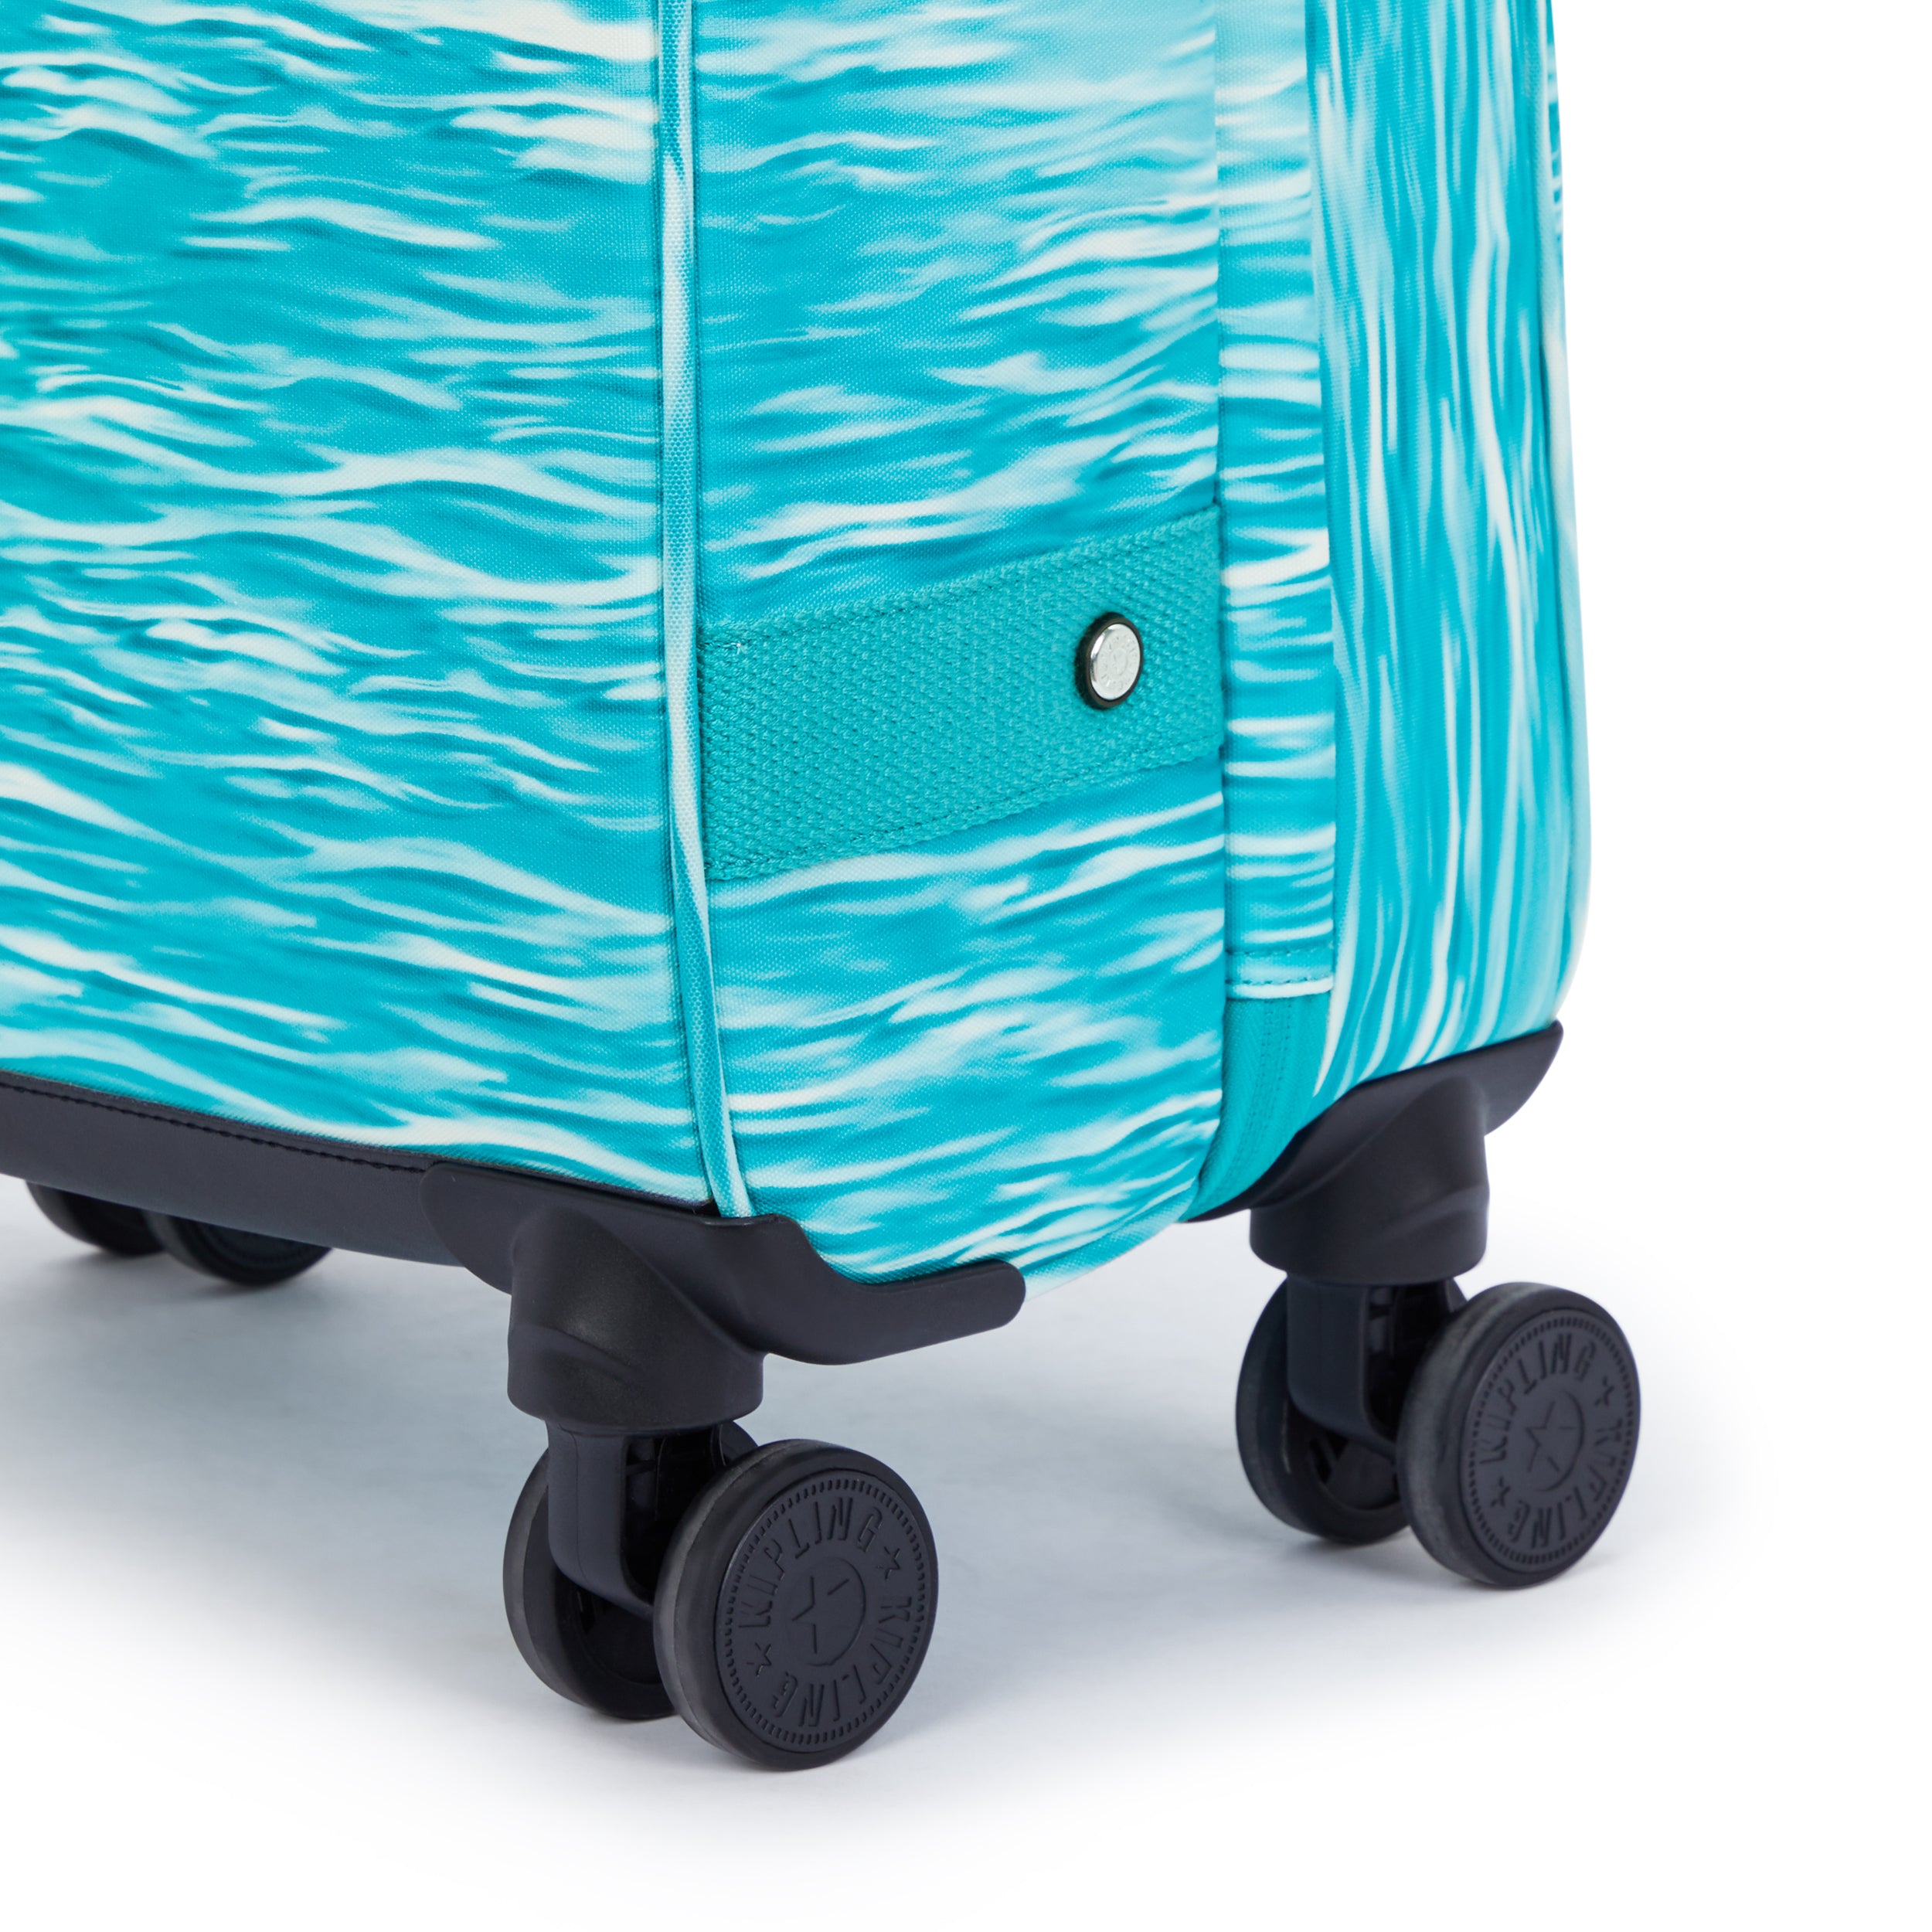 Kipling-Spontaneous S-Small Cabin Size Wheeled Luggage-Aqua Pool-I7211-5Mf